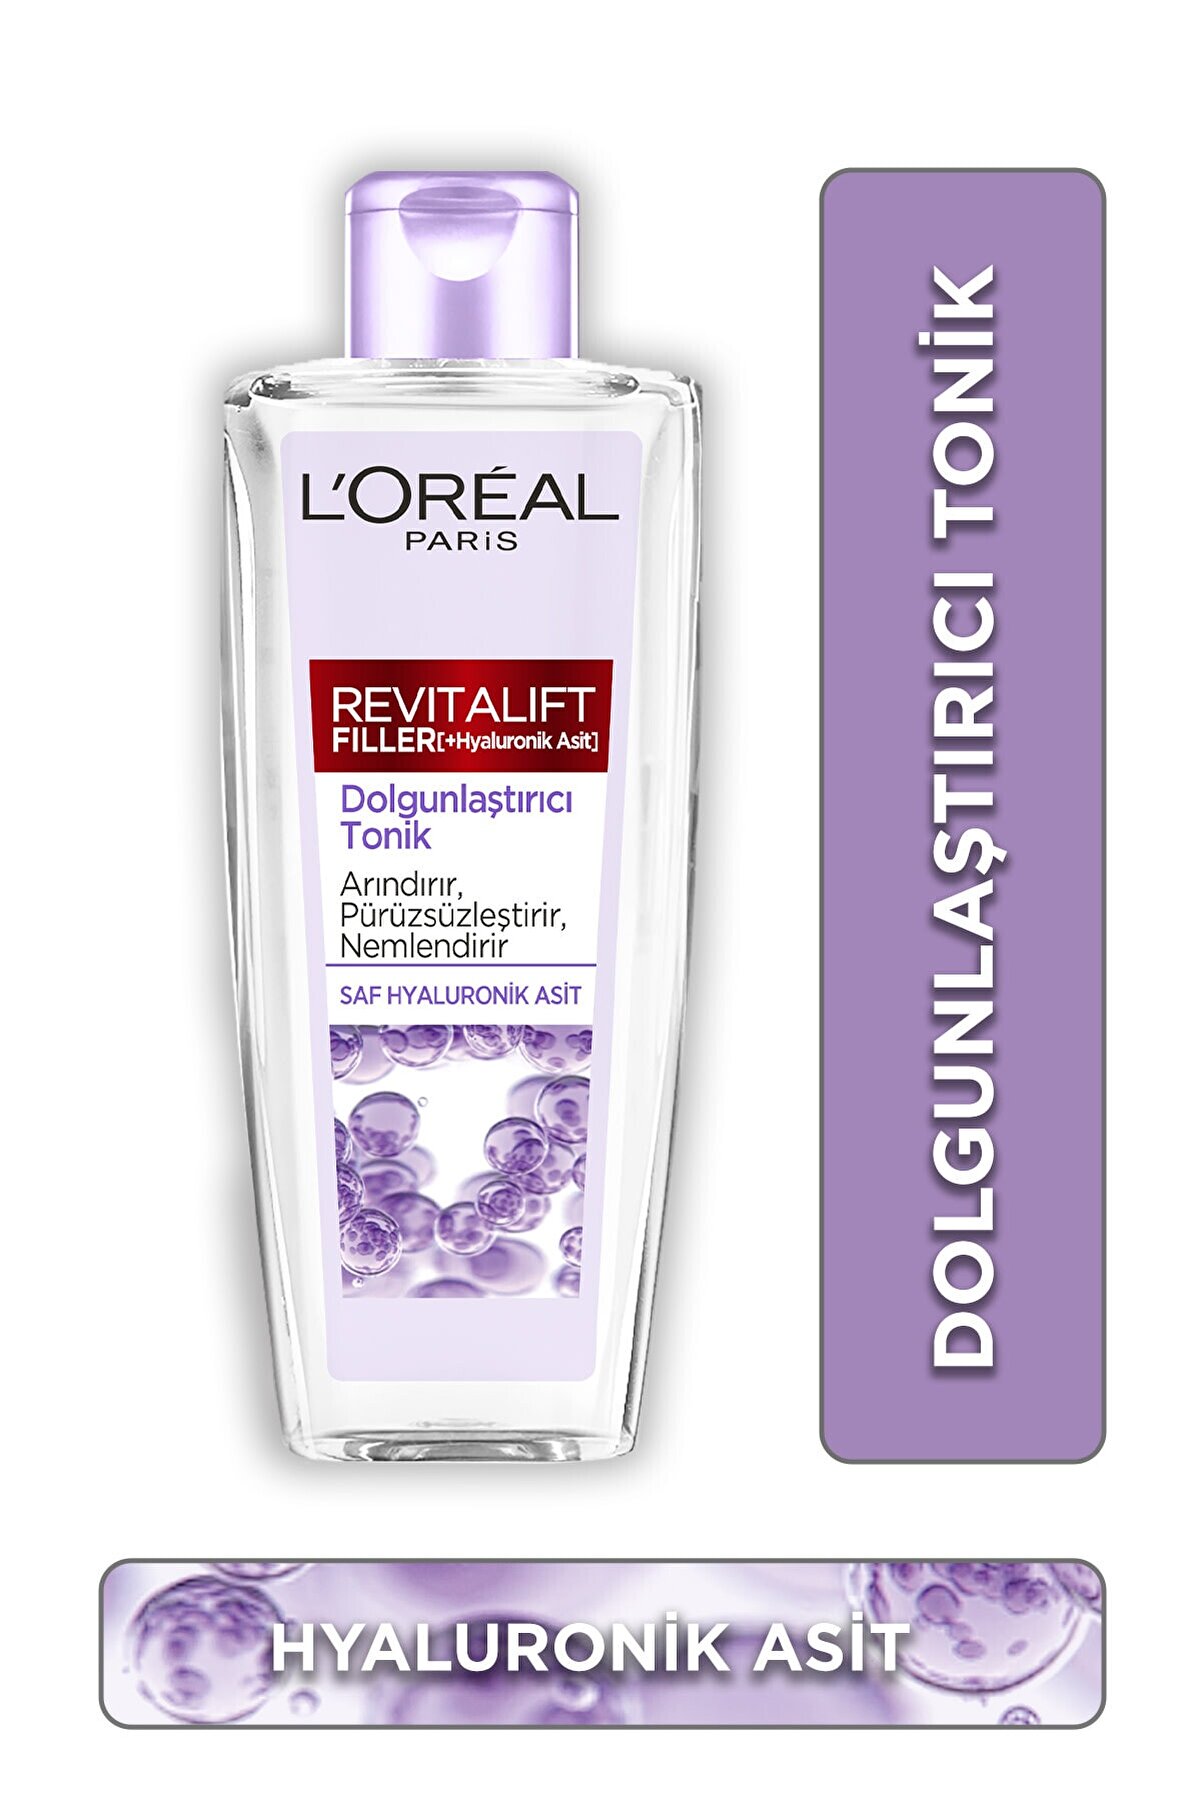 L'Oreal Paris L'oréal Paris Revitalift Filler Dolgunlaştırıcı Tonik 200ml - Hyaluronik Asit